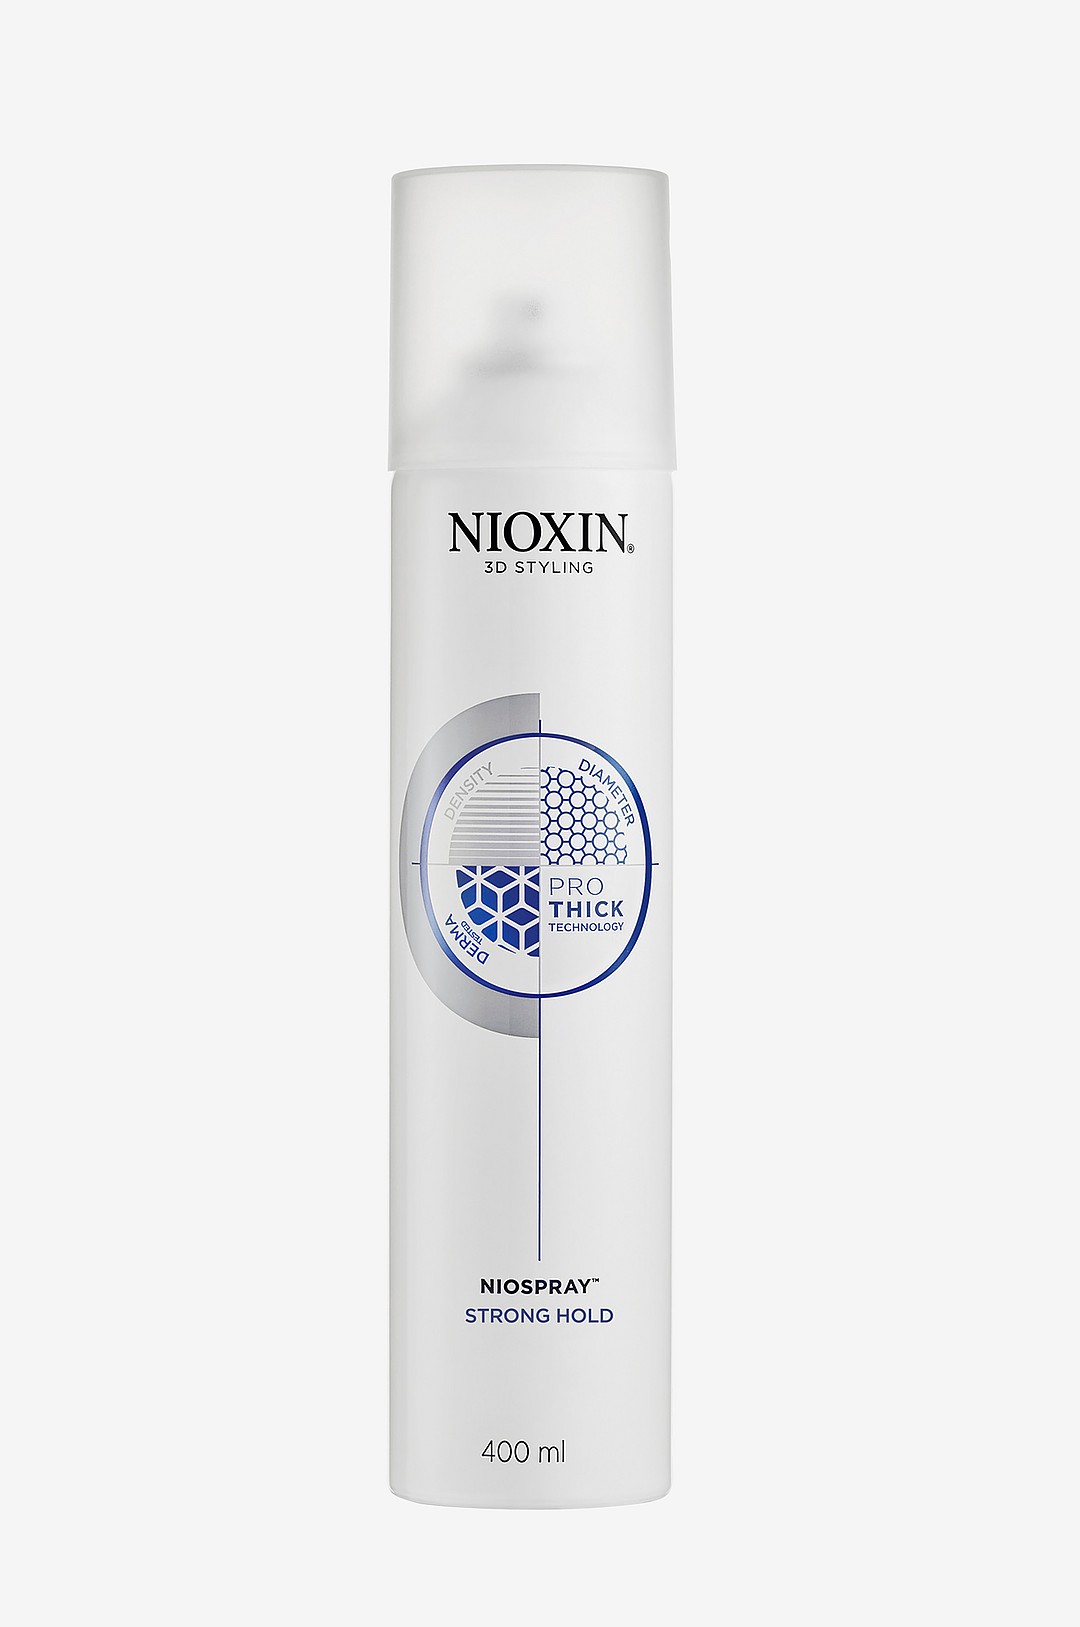 Nioxin - Niospray Extra Hold 400 ml